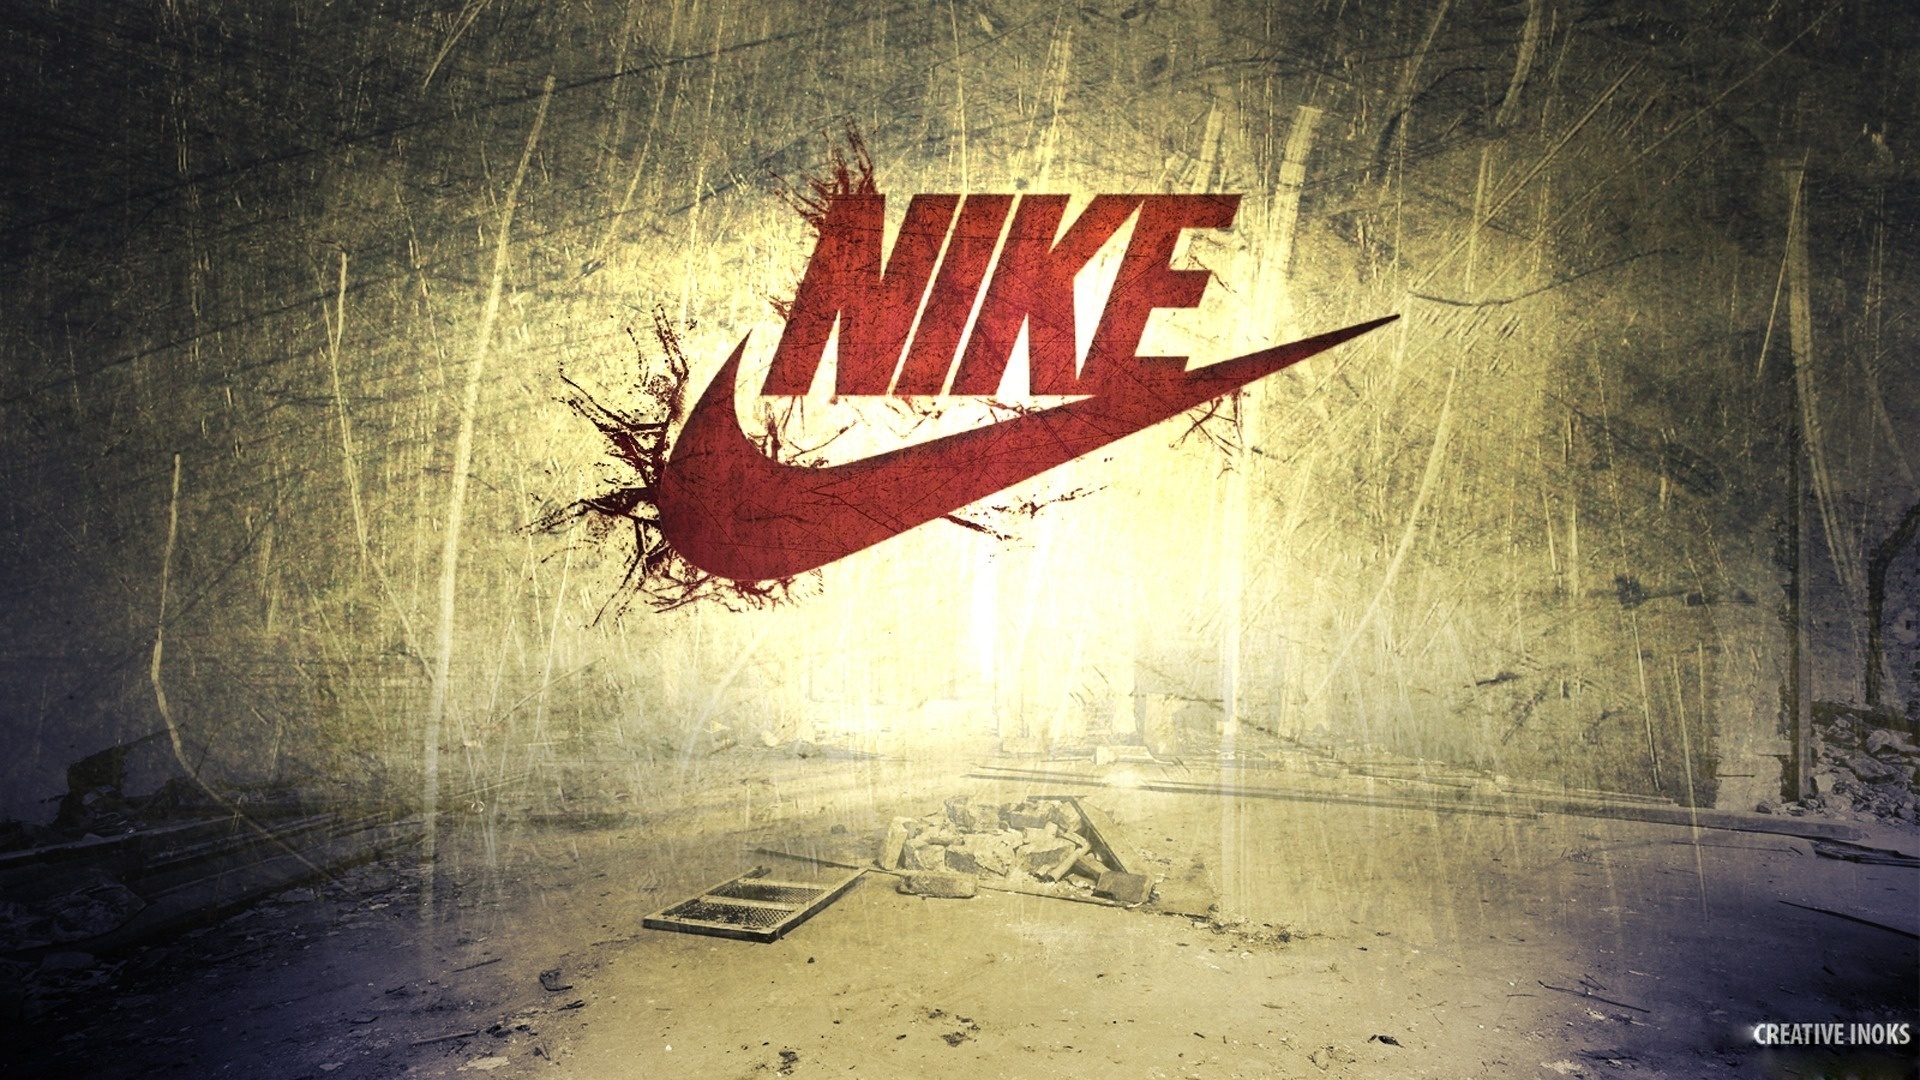 Nike Logo Design Wallpaper Picture High Resolution